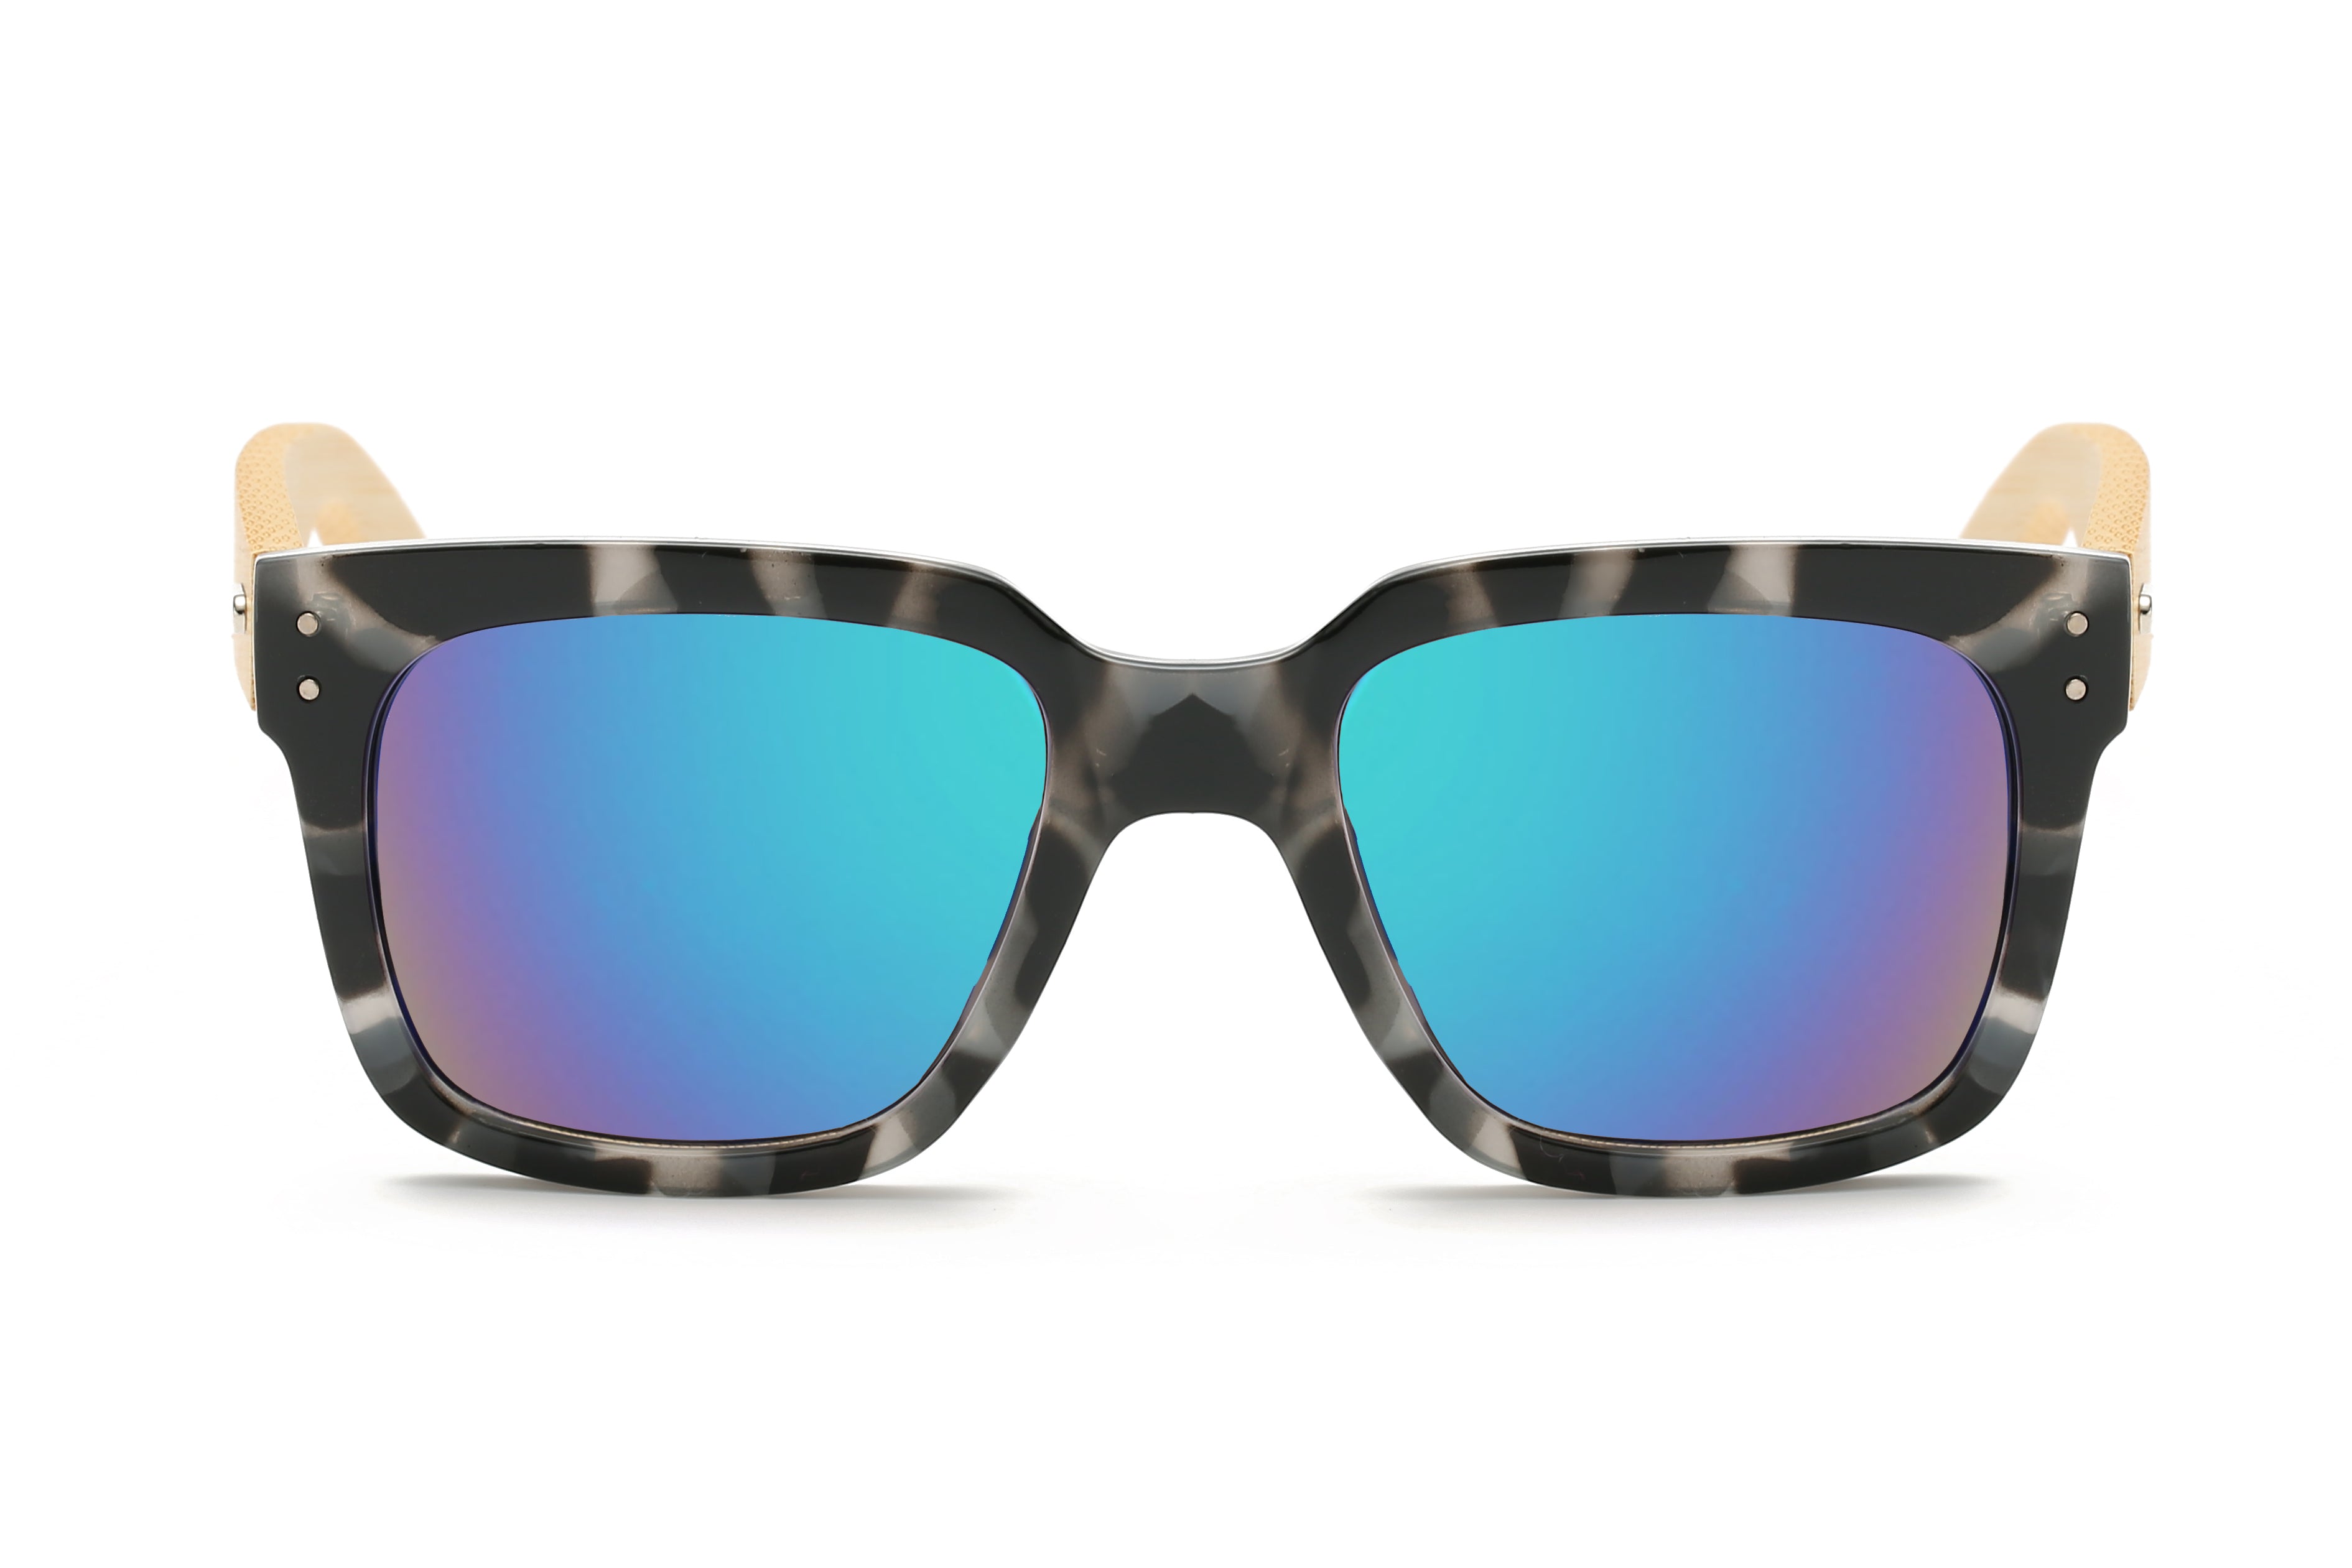 S3005 - Retro Square Fashion Sunglasses Assorted/Mixed